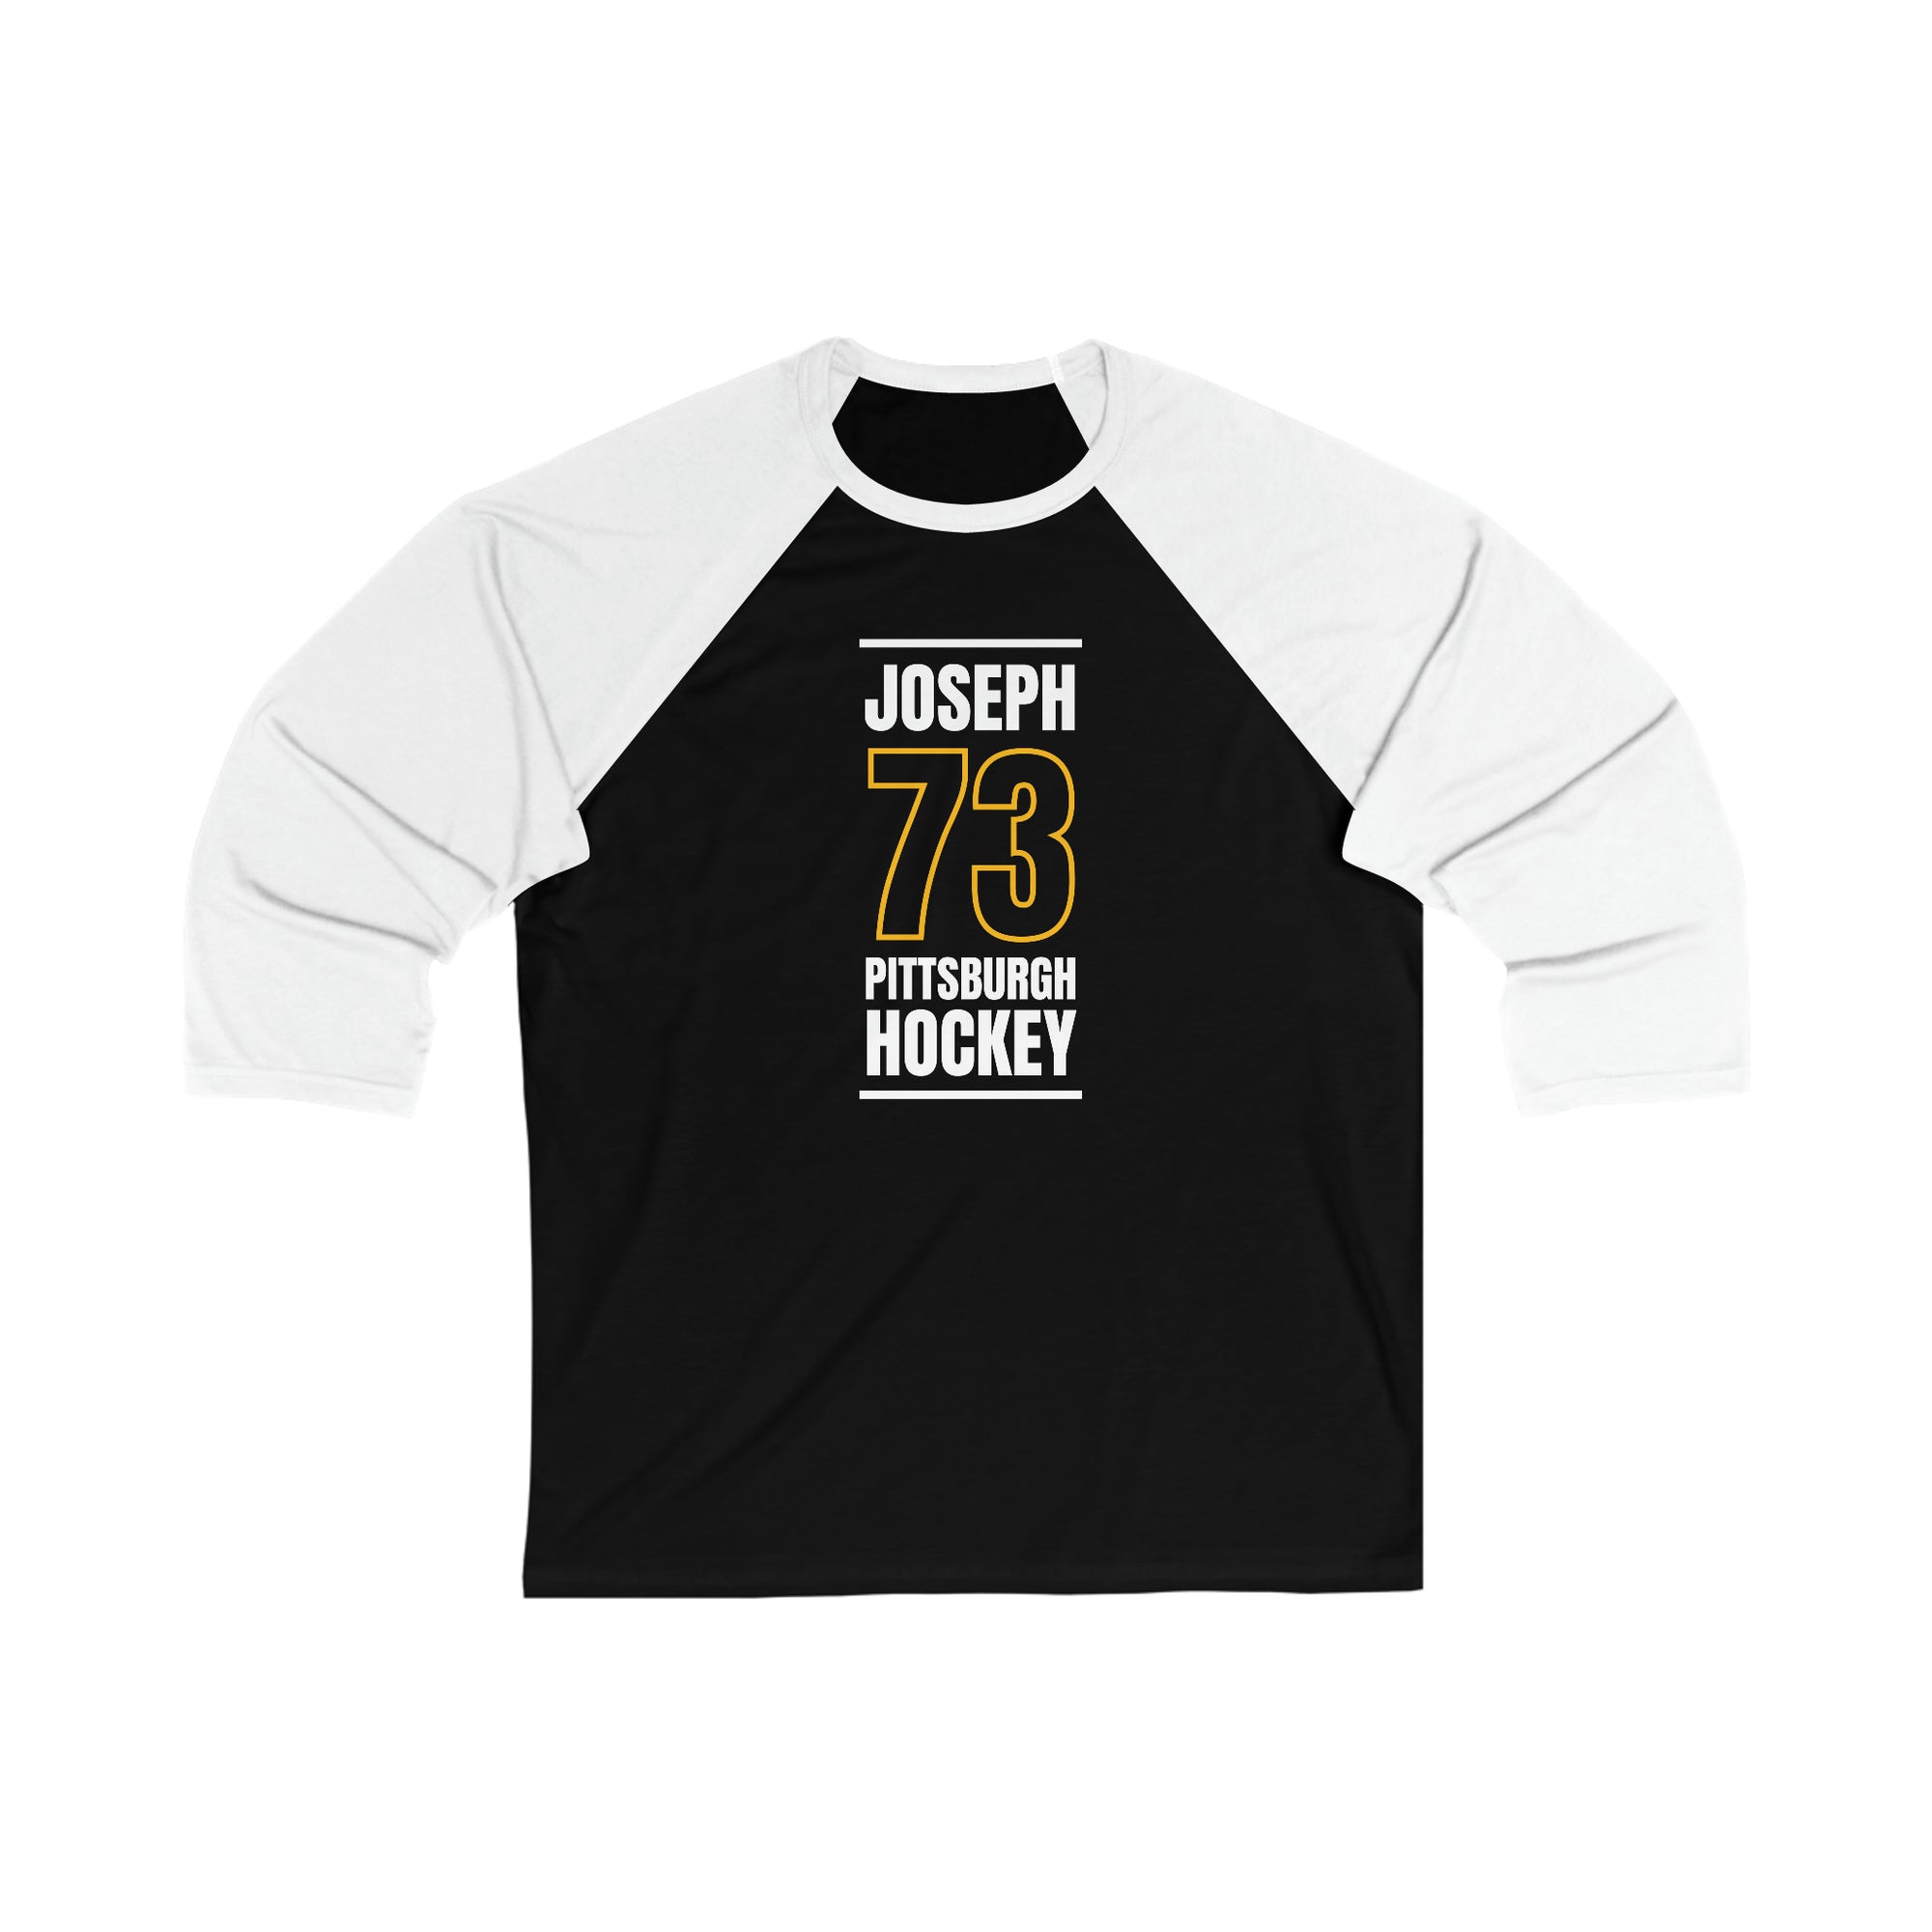 Joseph 73 Pittsburgh Hockey Black Vertical Design Unisex Tri-Blend 3/4 Sleeve Raglan Baseball Shirt